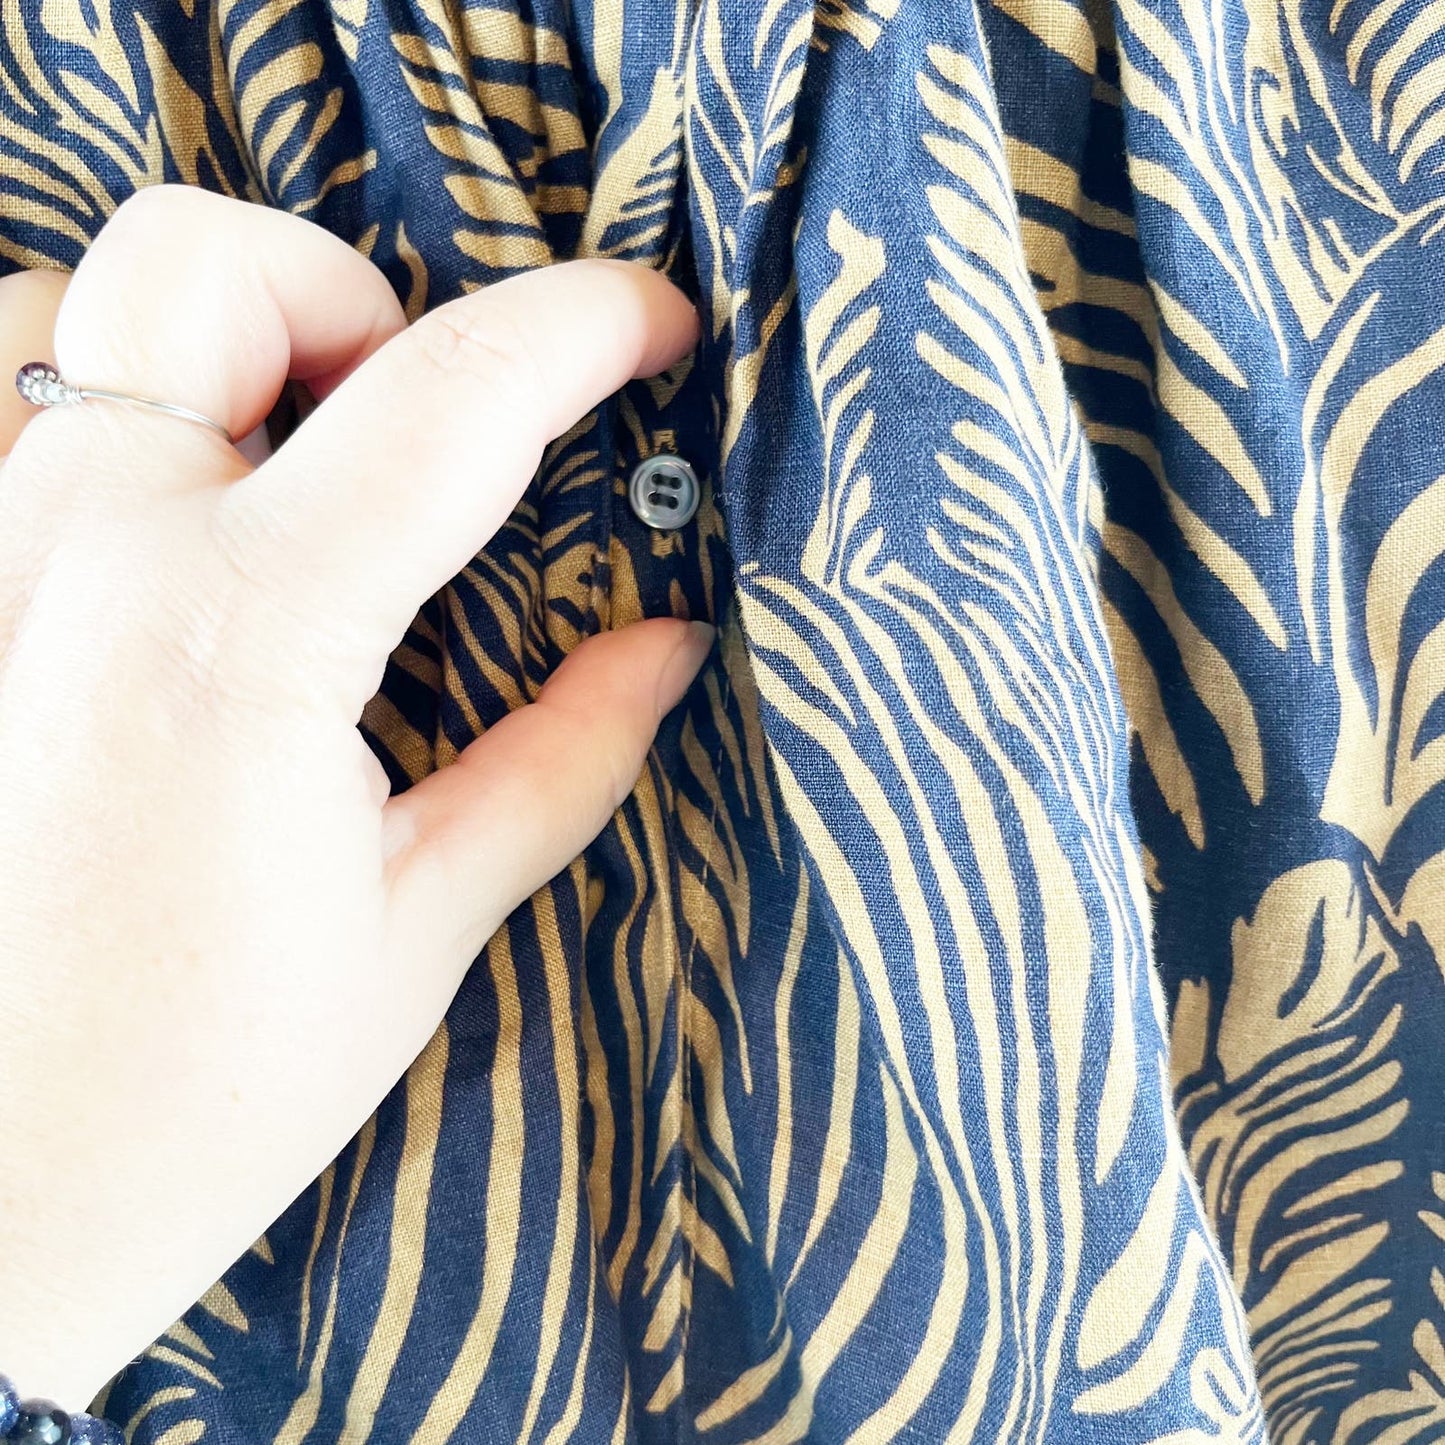 Banana Republic 100% Linen Zebra Print Balloon Sleeve Blouse Tan Blue Small